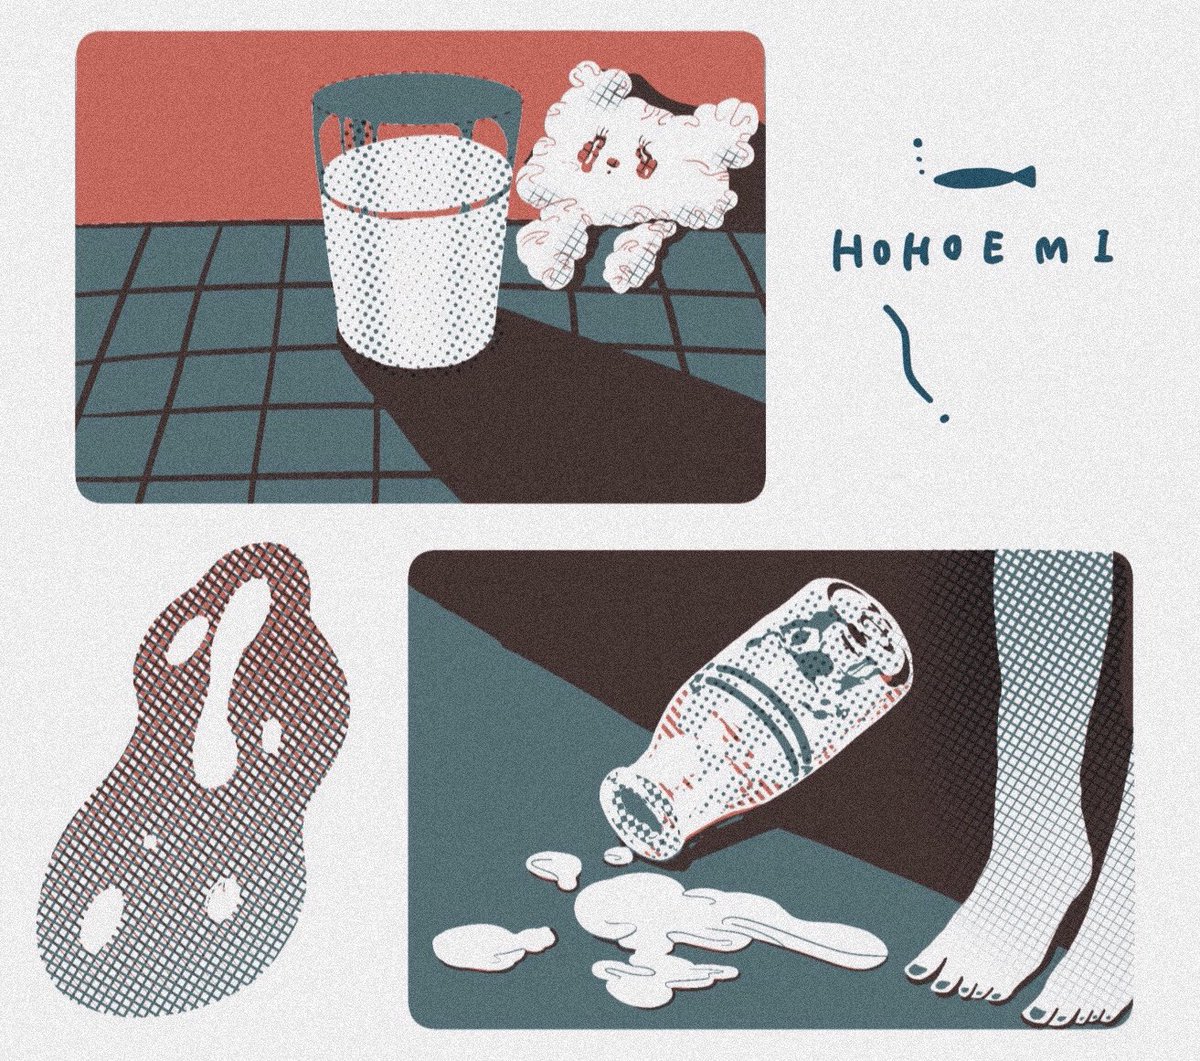 no humans english text tile floor halftone tiles fish barefoot  illustration images